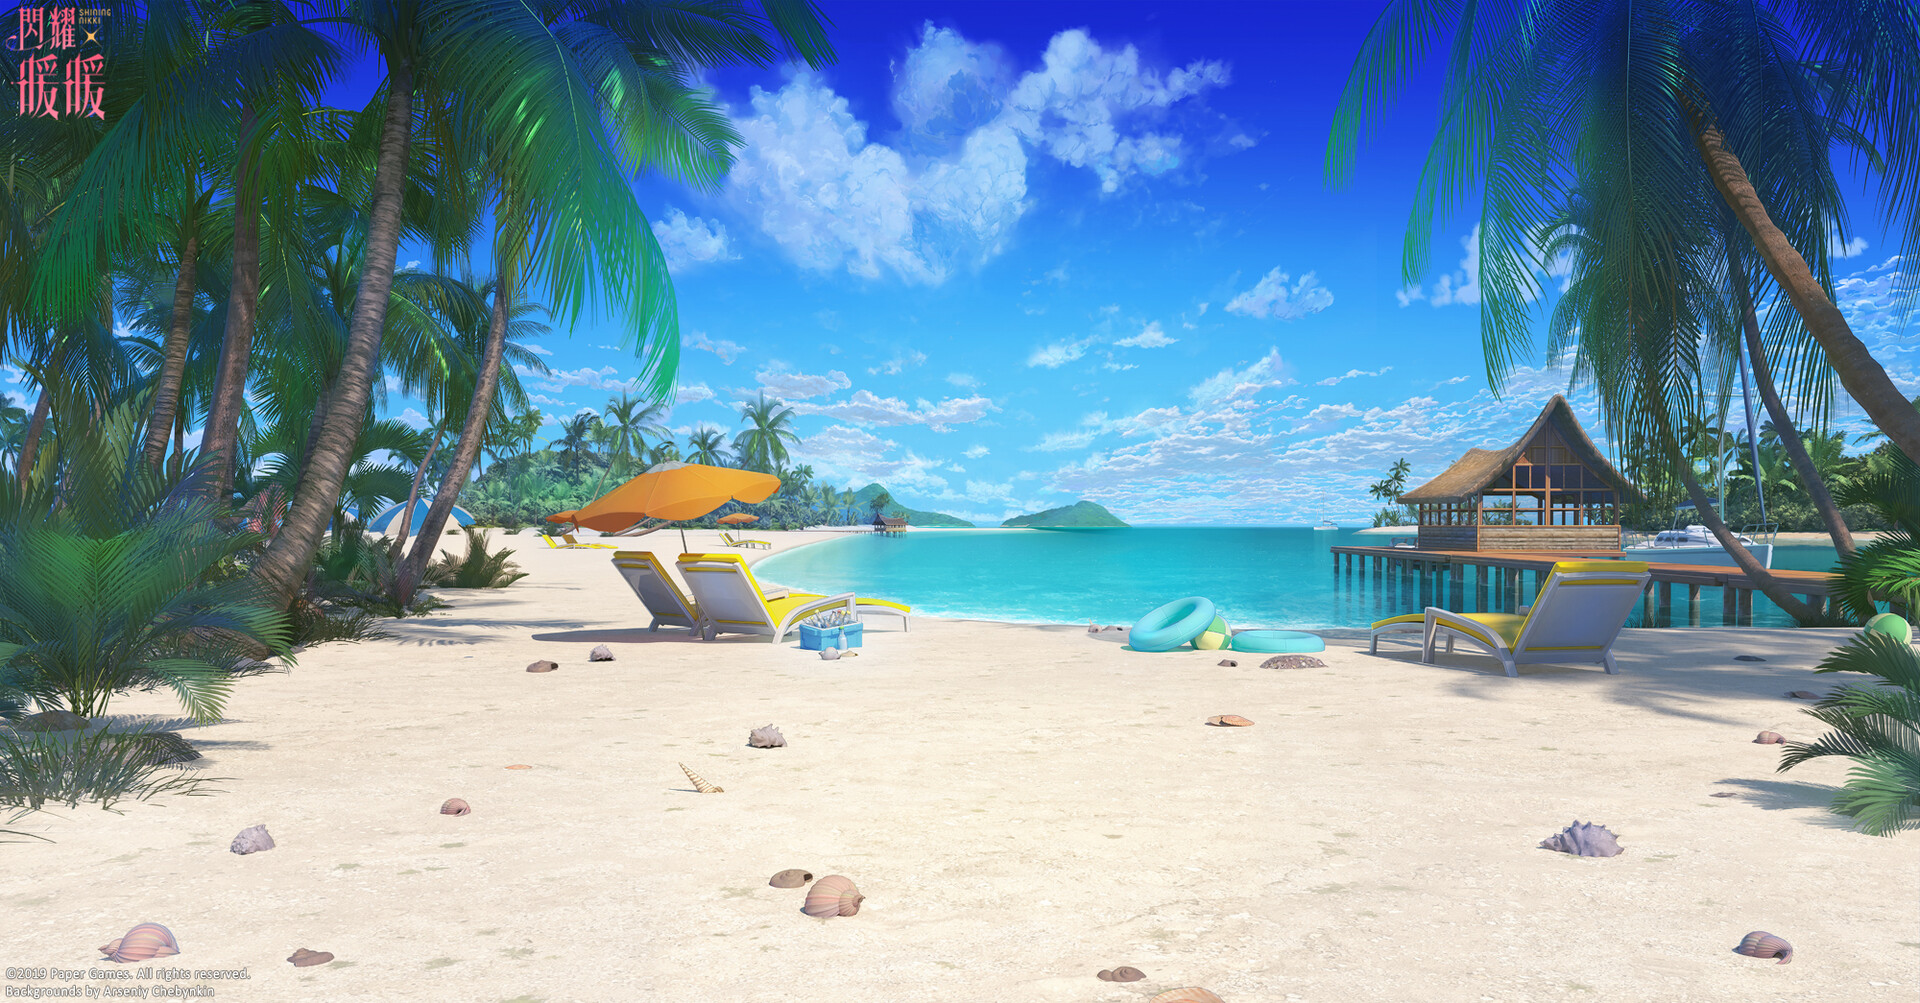 Anime 1920x1003 ArseniXC digital art landscape beach outdoors tropical palm trees clouds ArtStation 2019 (year) beach ball inflatable rings parasol sunbathing seashells sea